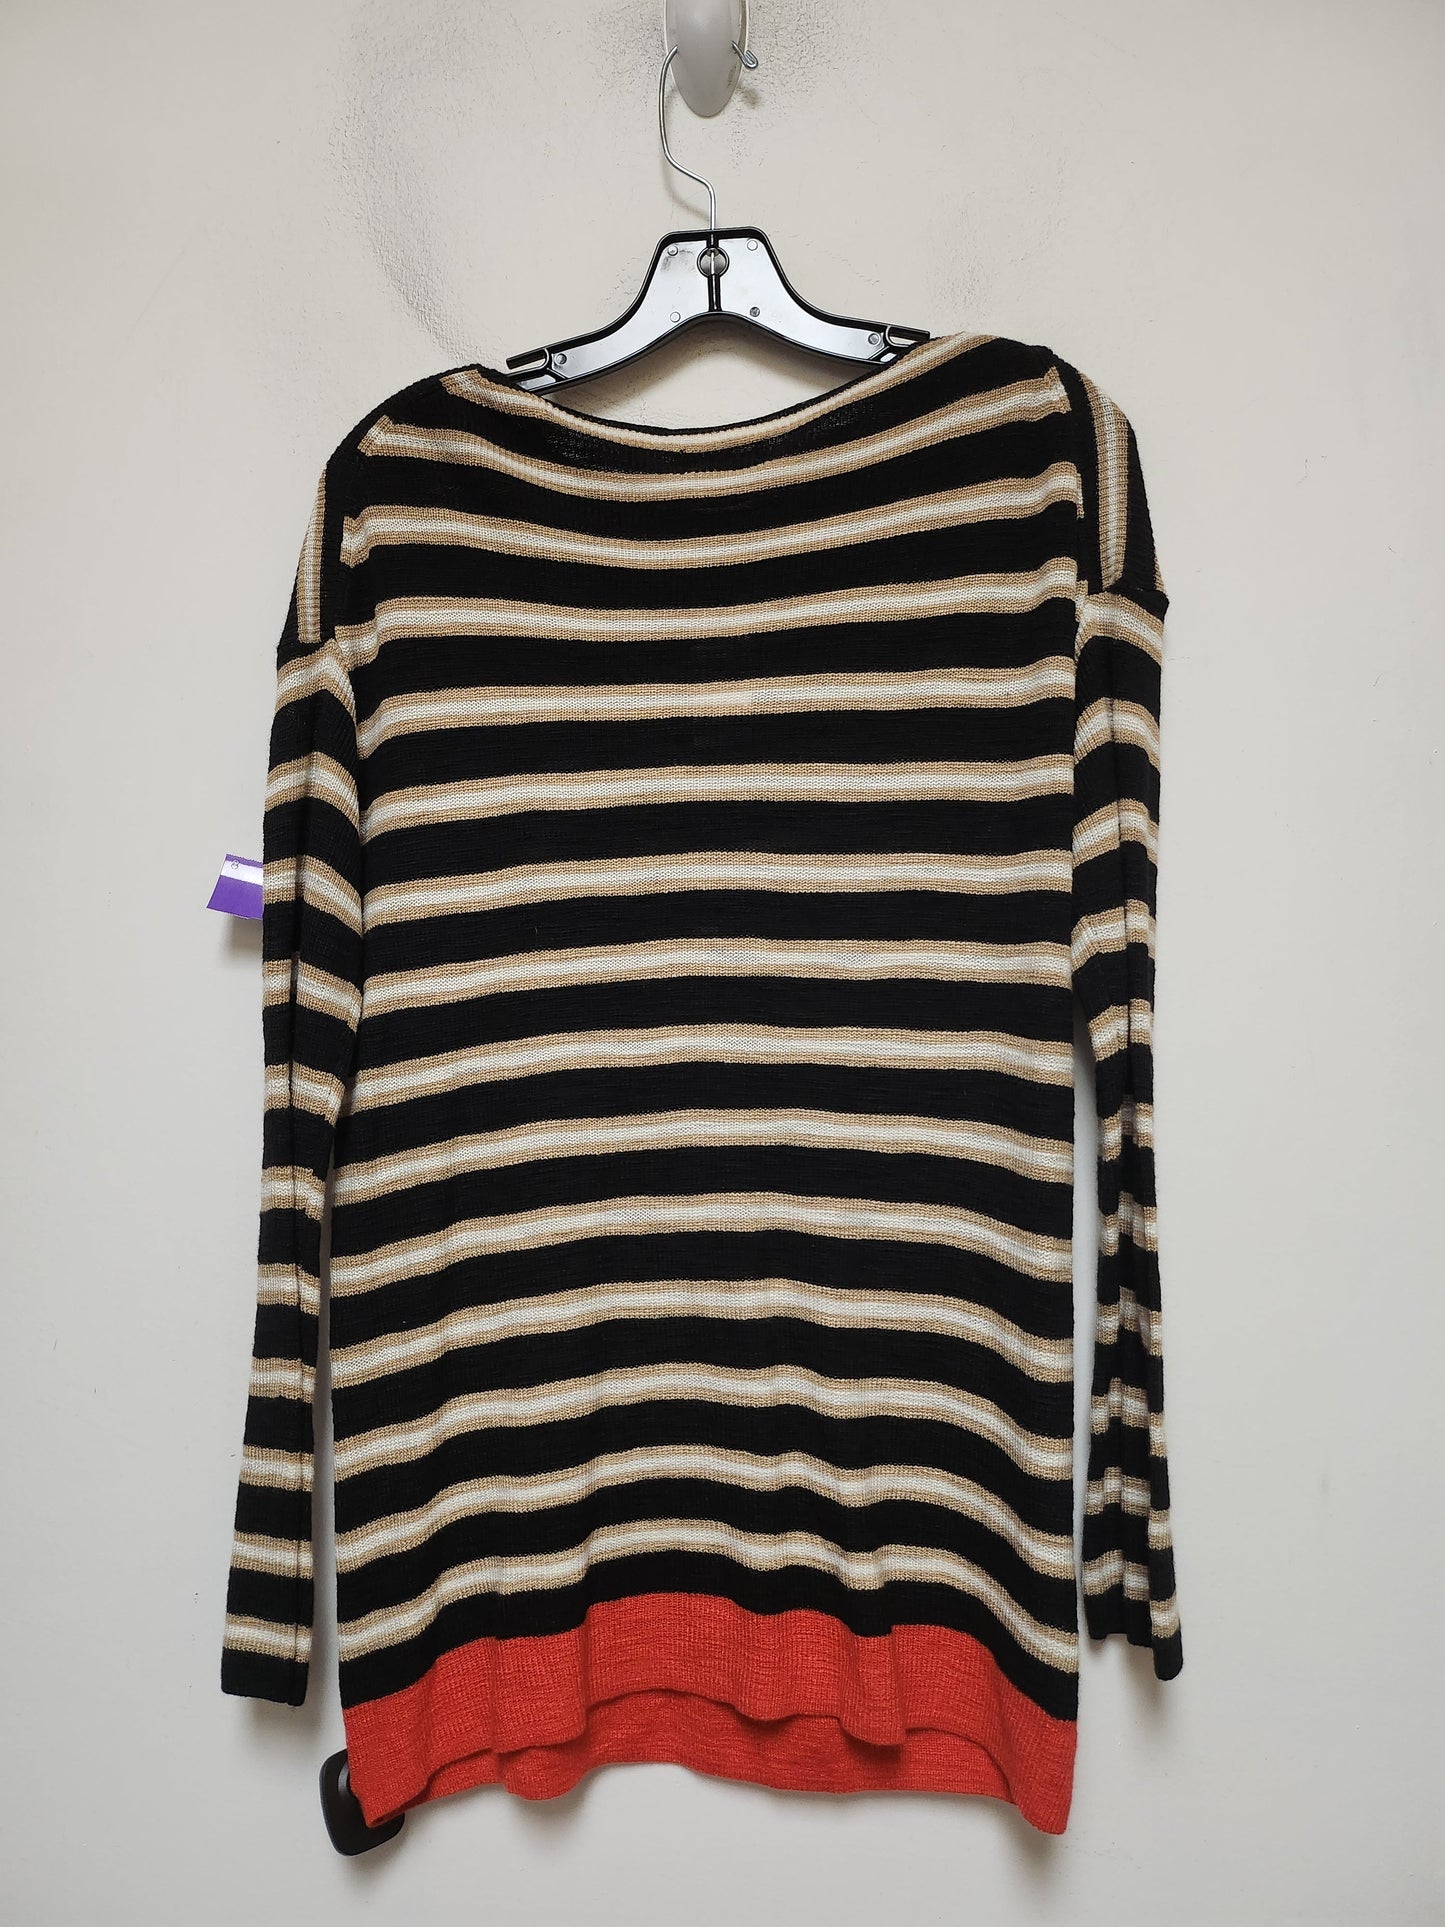 Striped Pattern Sweater Lou And Grey, Size Xs